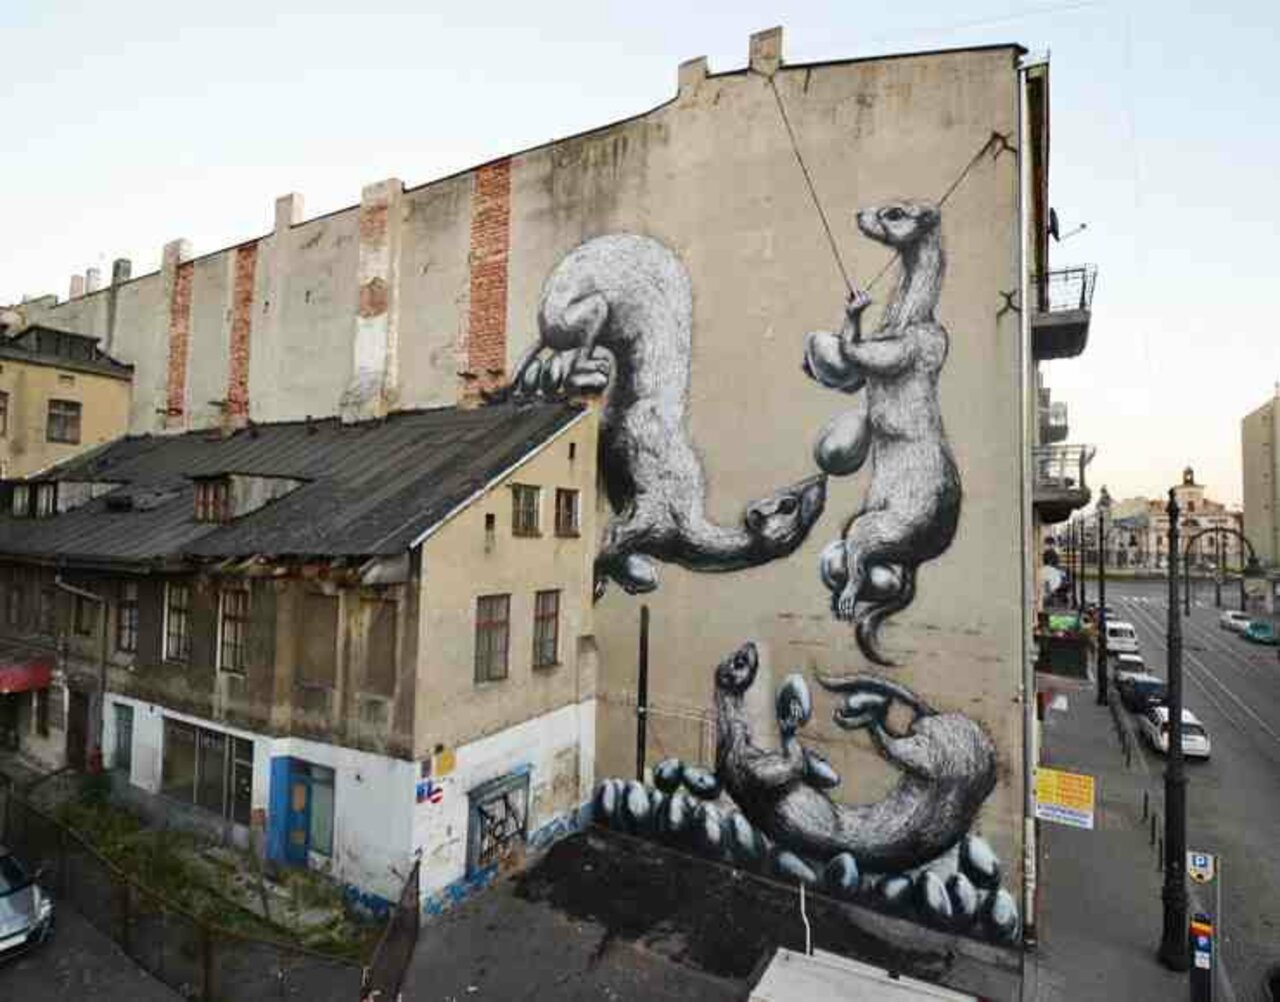 Mural by ROA #Lodz #Poland Streetart #urbanart #graffiti #mural #art https://t.co/eKeQSgSc7Z